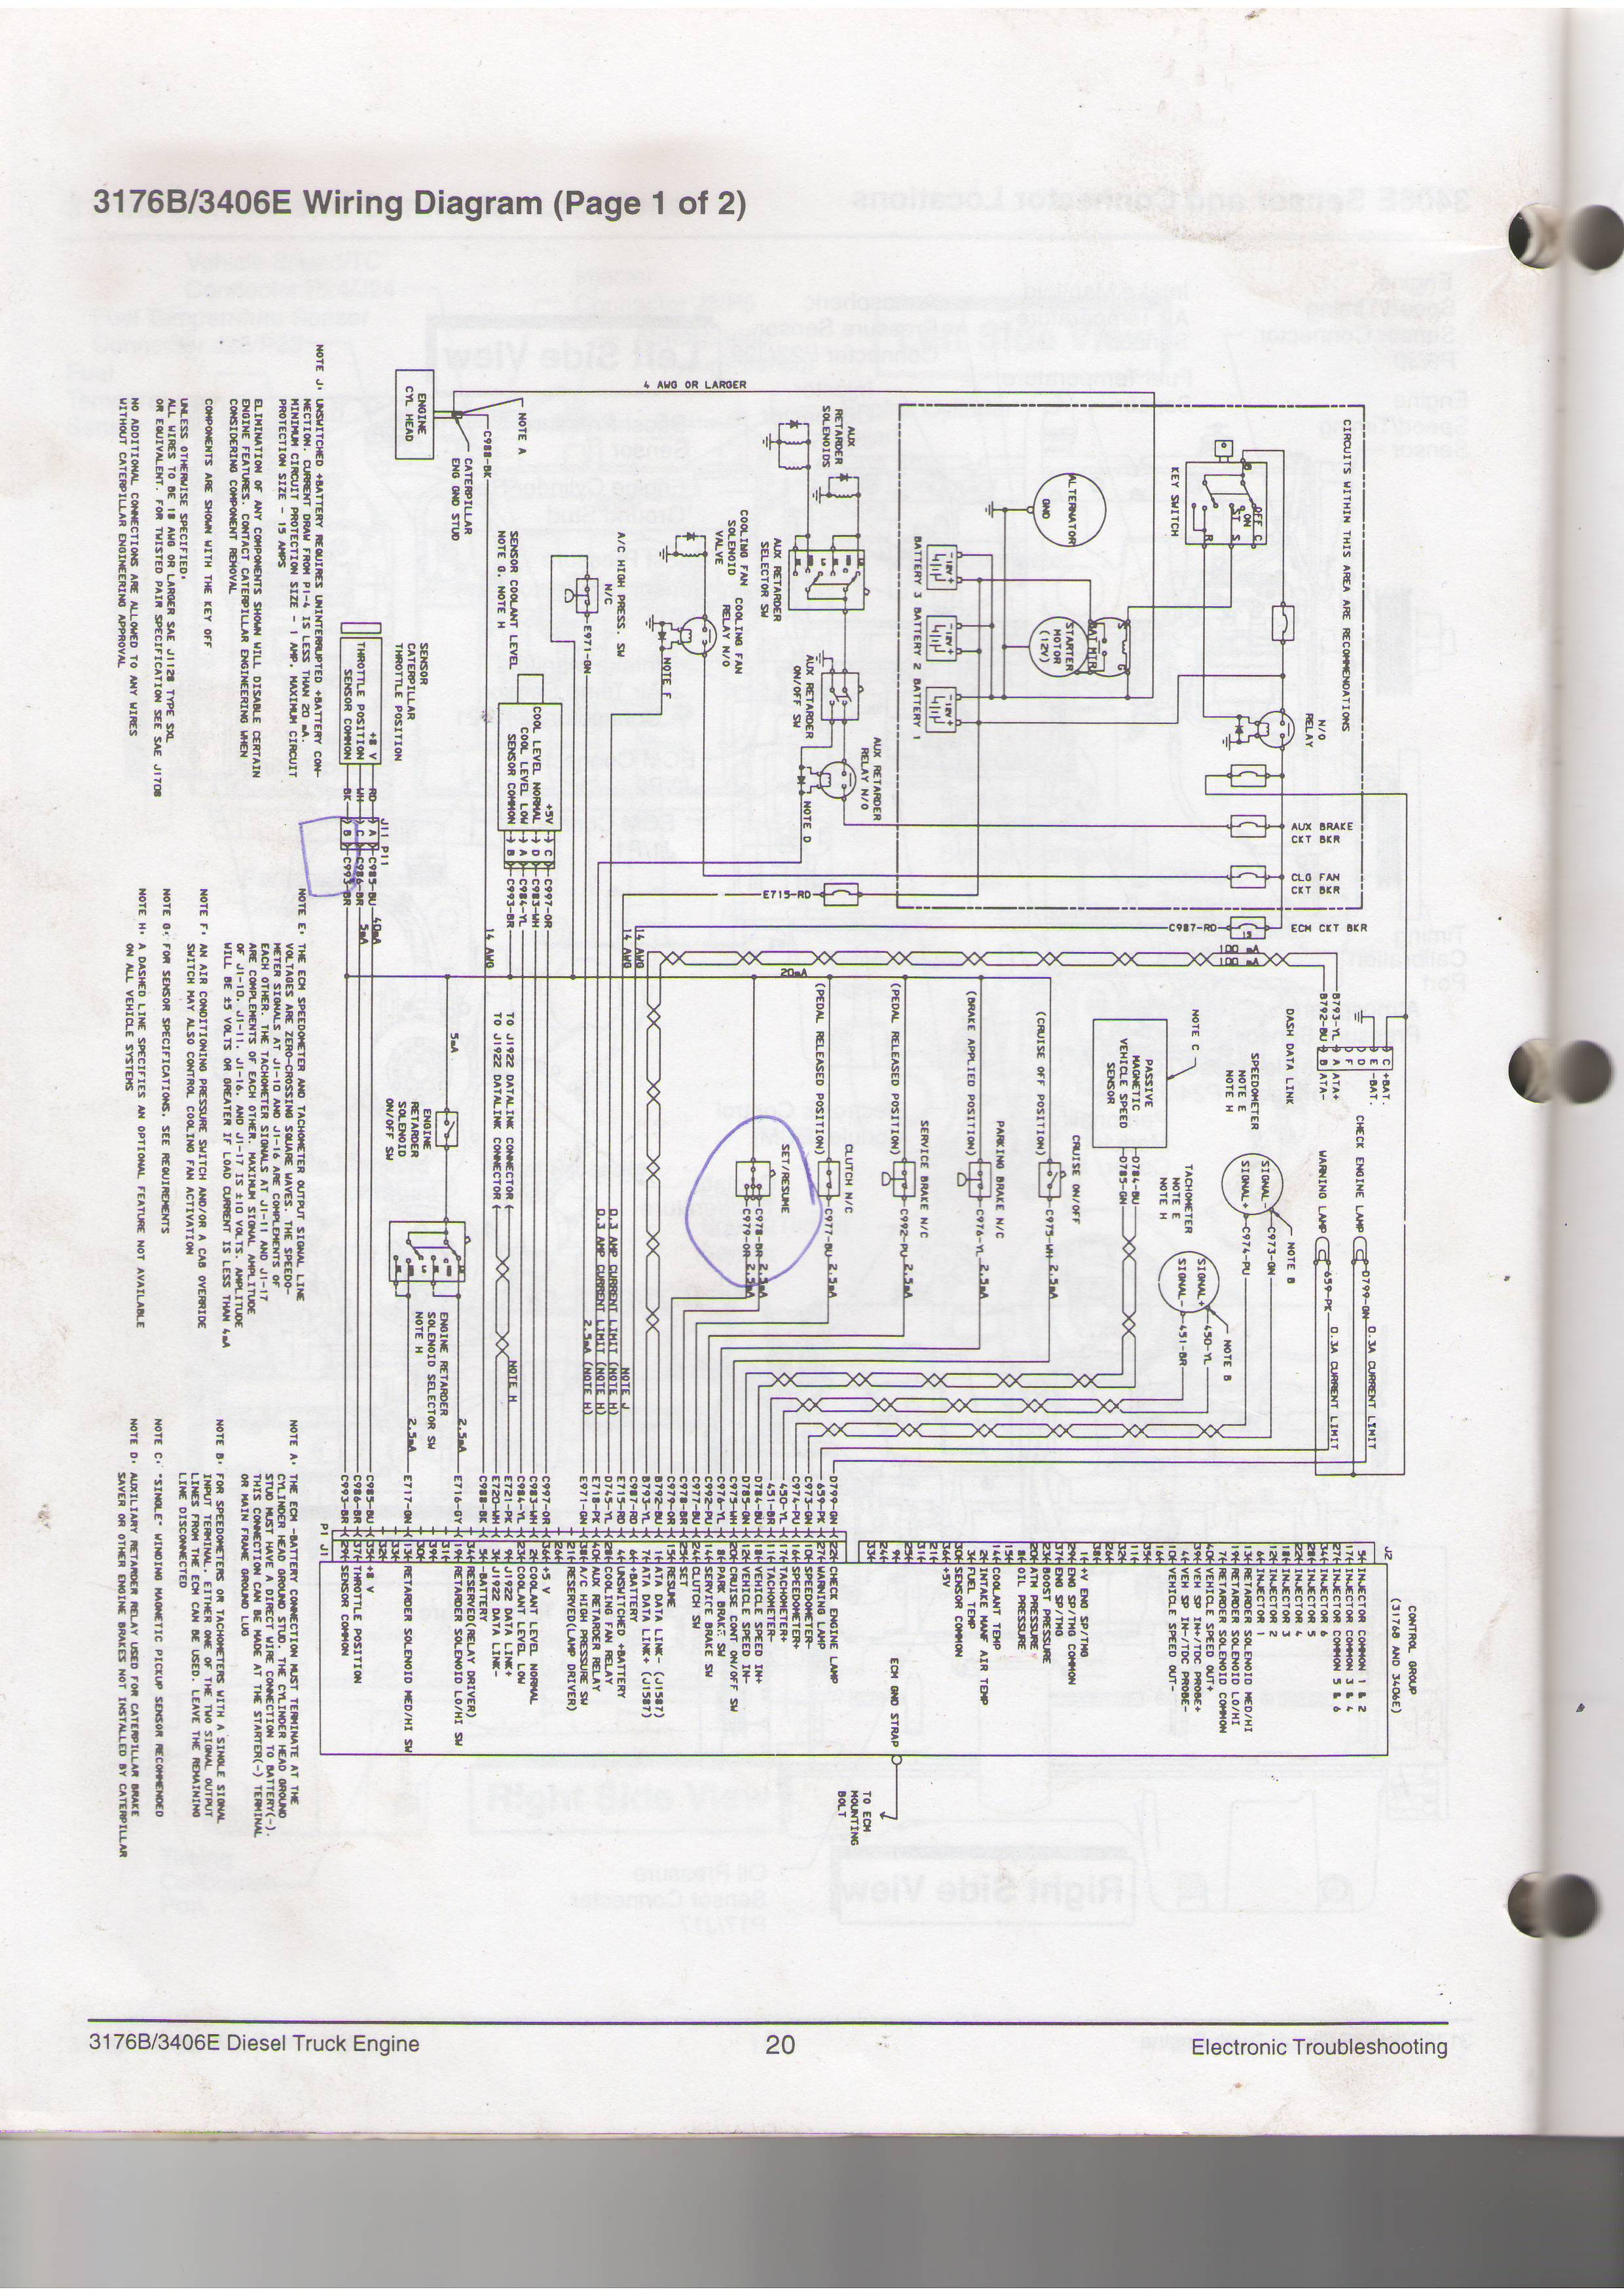 C12 Wiring Diagram | Wiring Library - Cat C15 Ecm Wiring Diagram